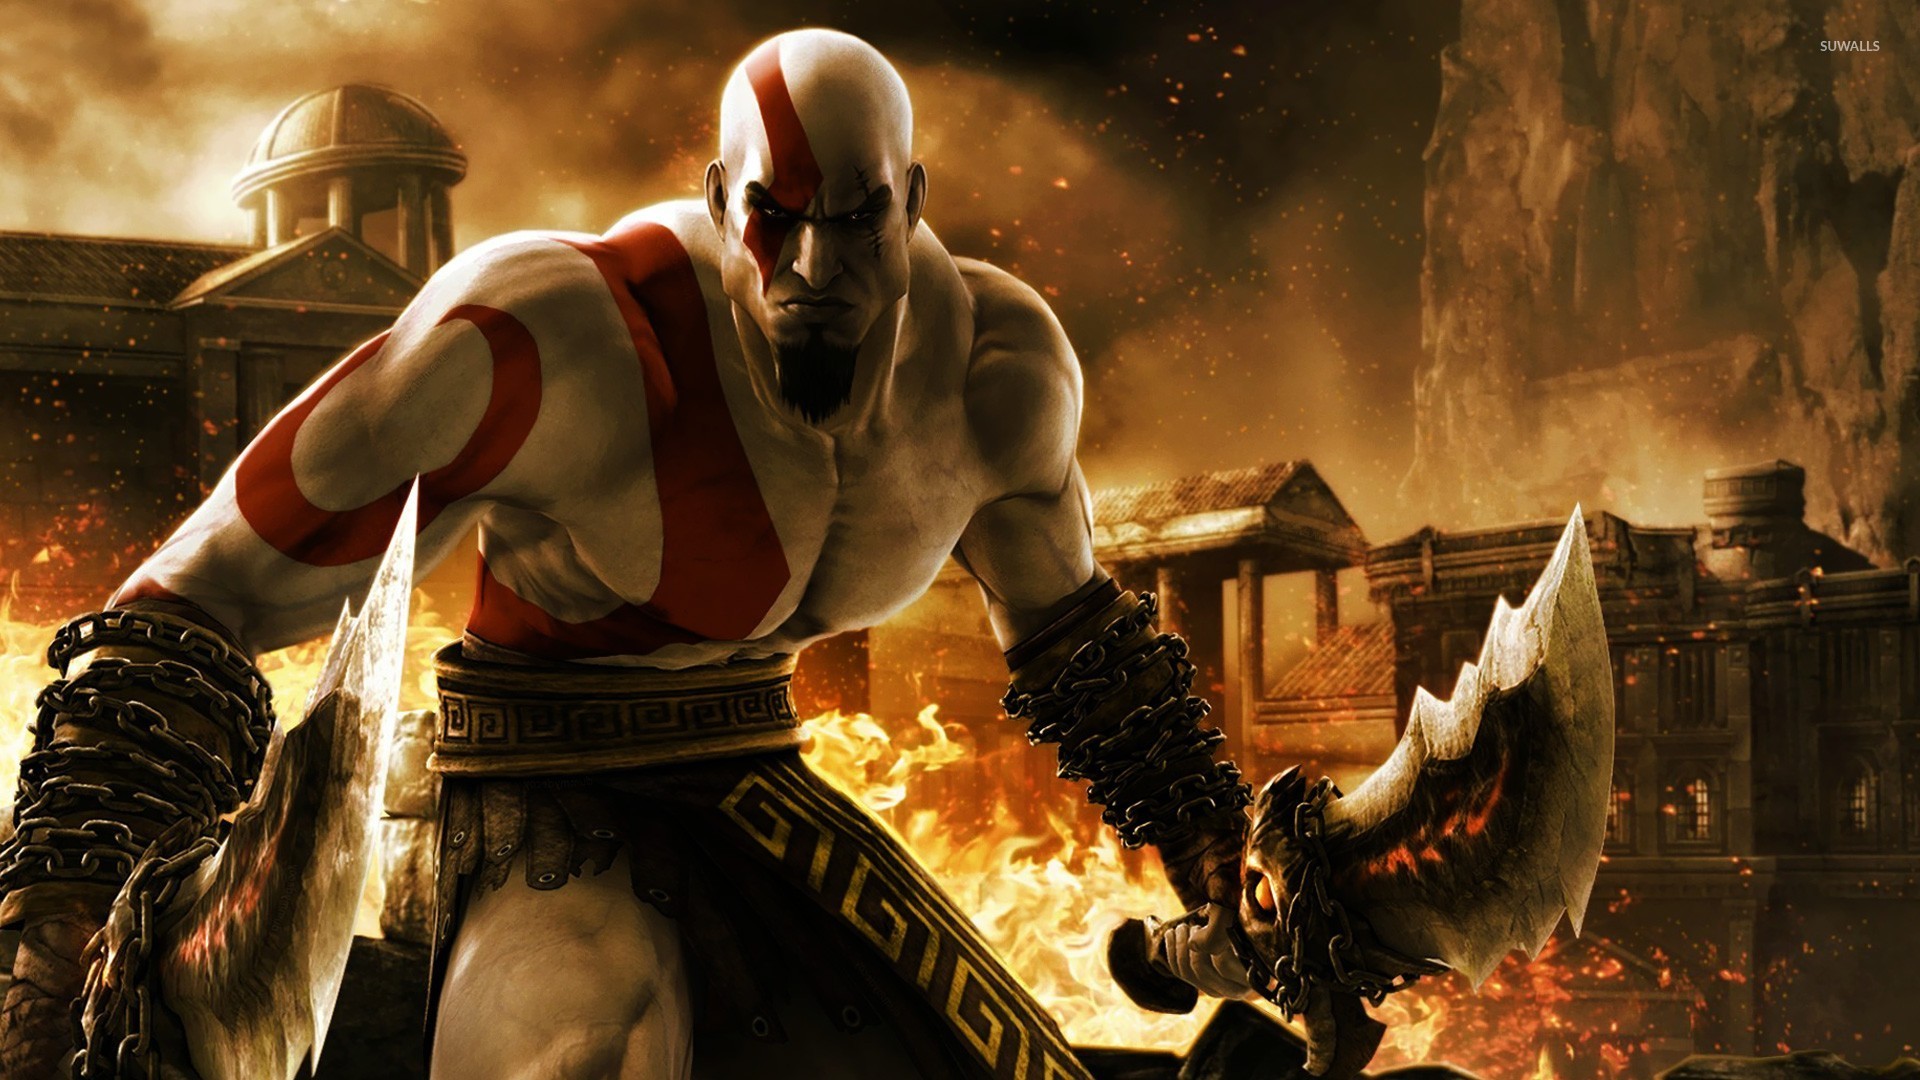 Kratos   God of War 3 wallpaper   Game wallpapers   24788 1920x1080